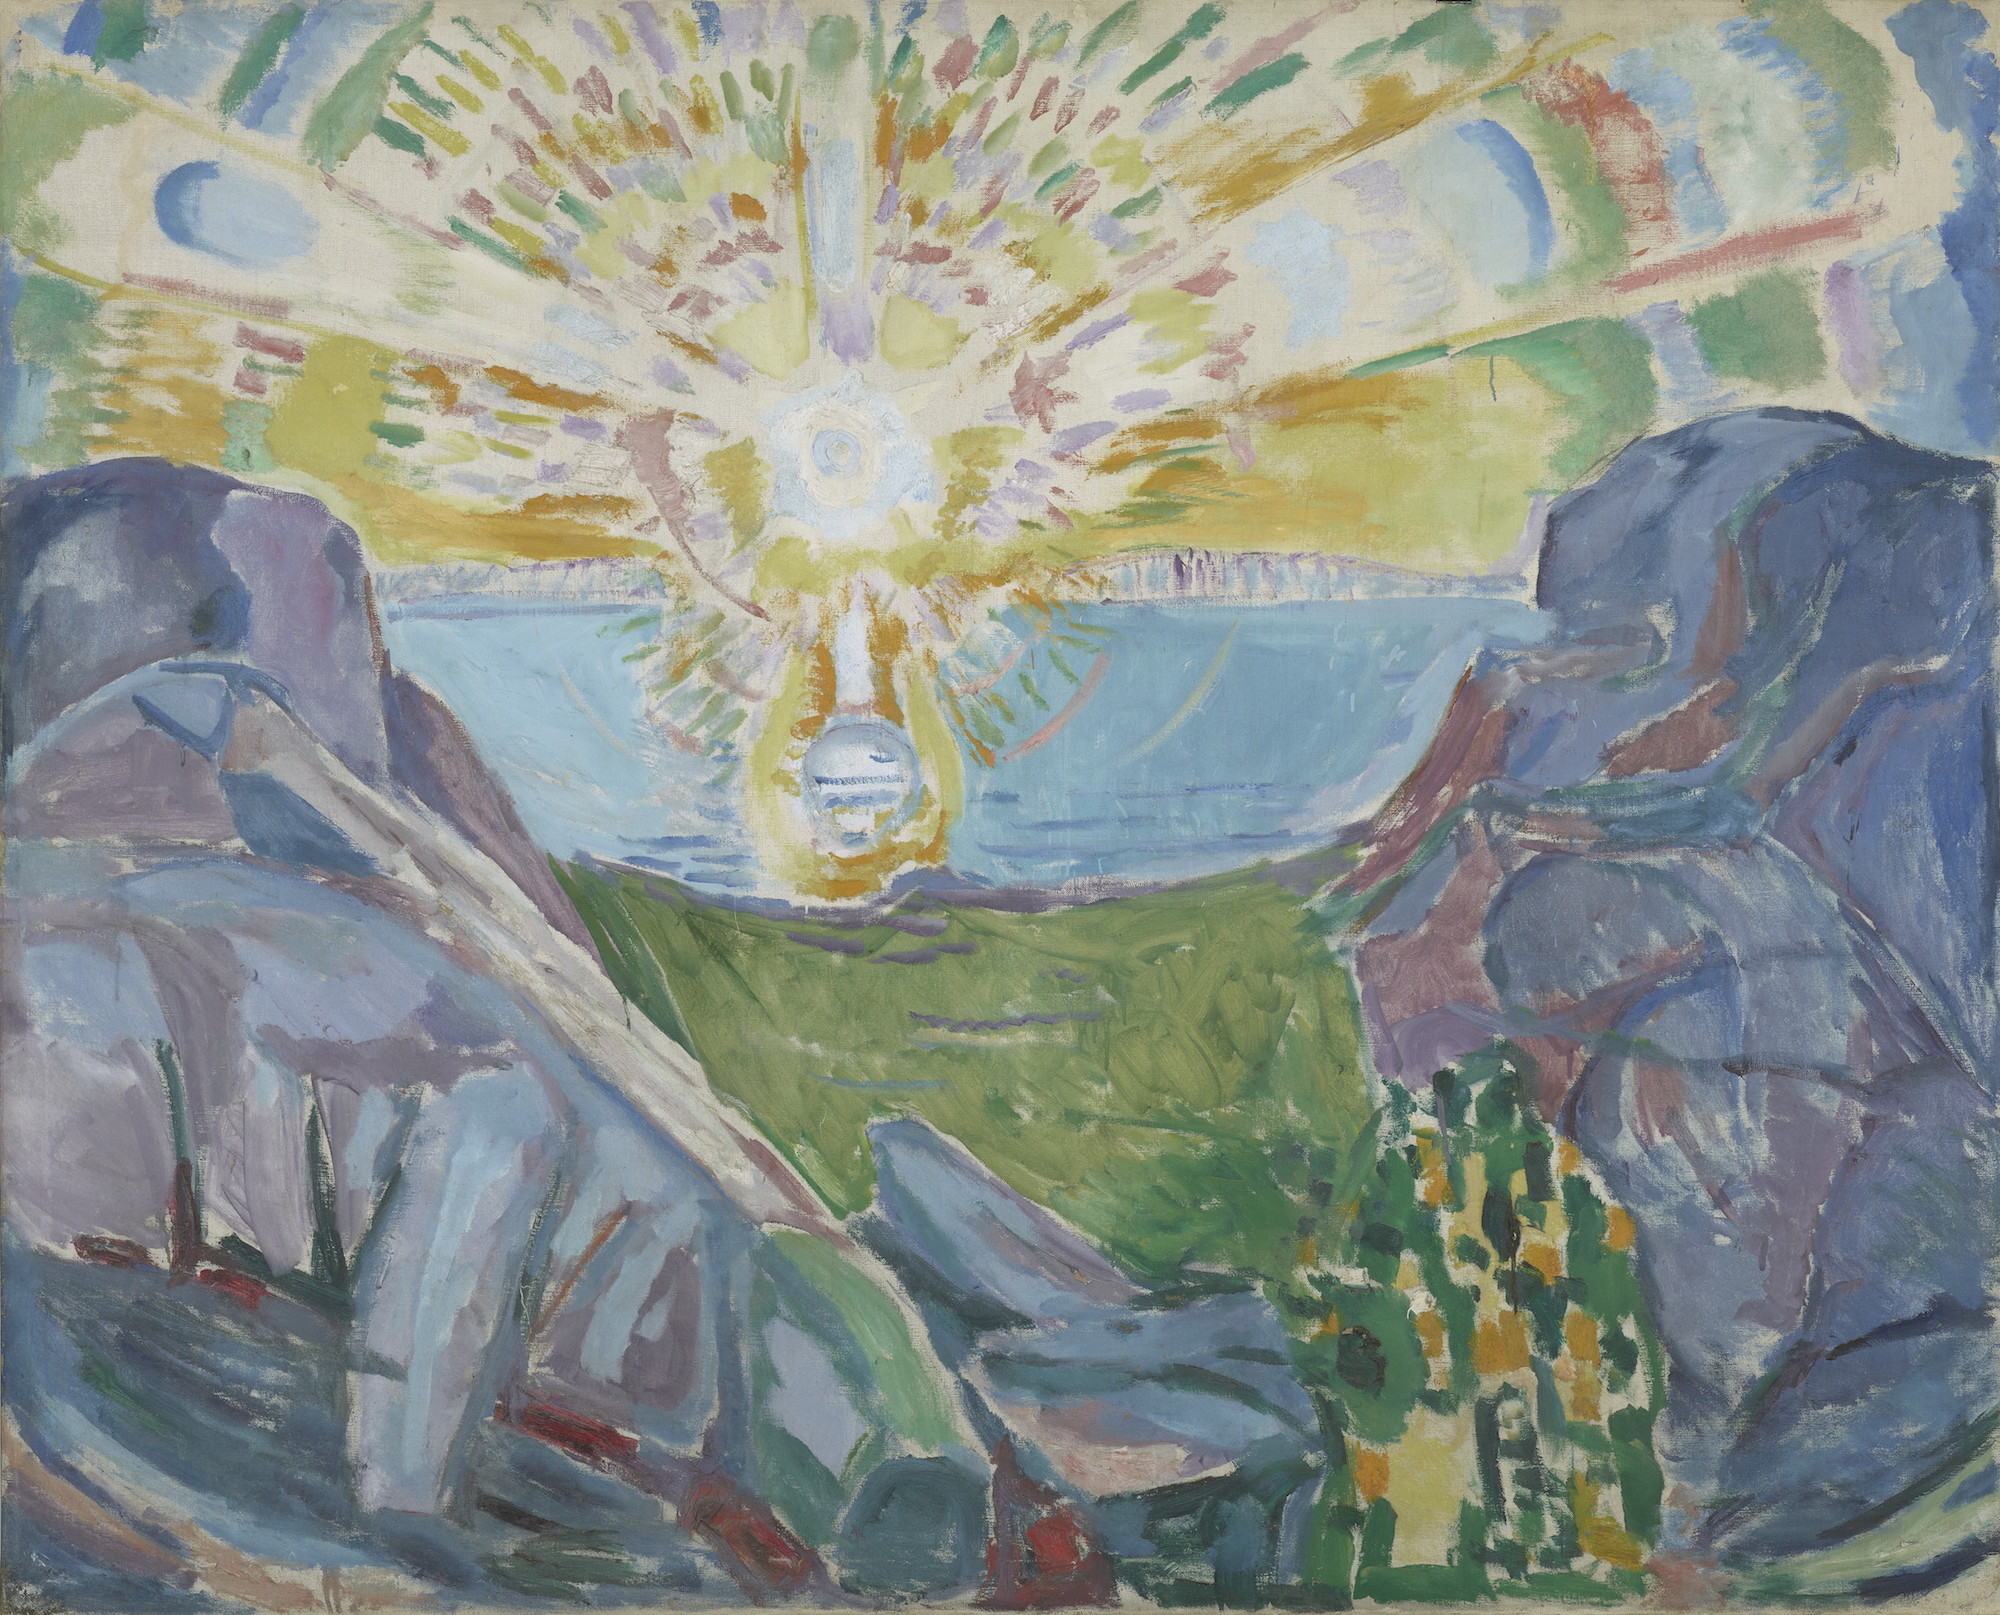 Edvard Munch (1863-1944), Le Soleil, 1910–1913. Huile sur toile, 162 x 205 cm. Oslo, Munchmuseet. Photo service de presse. © Oslo, Munchmuseet